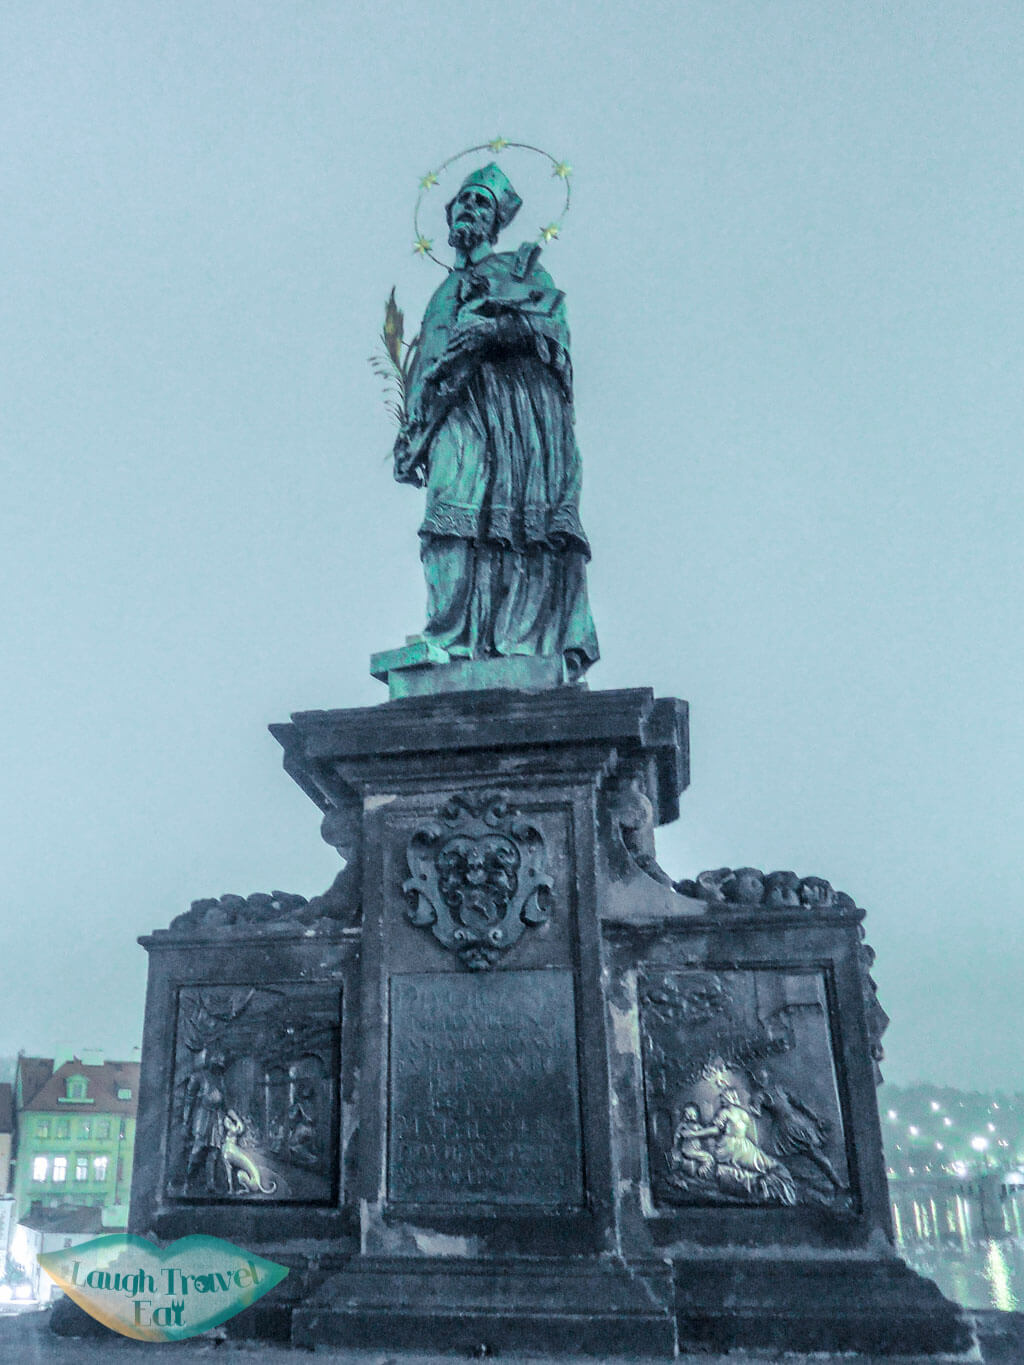 Charles Bridge statue of saint Prague, Czech Repulic - Laugh Travel Eat